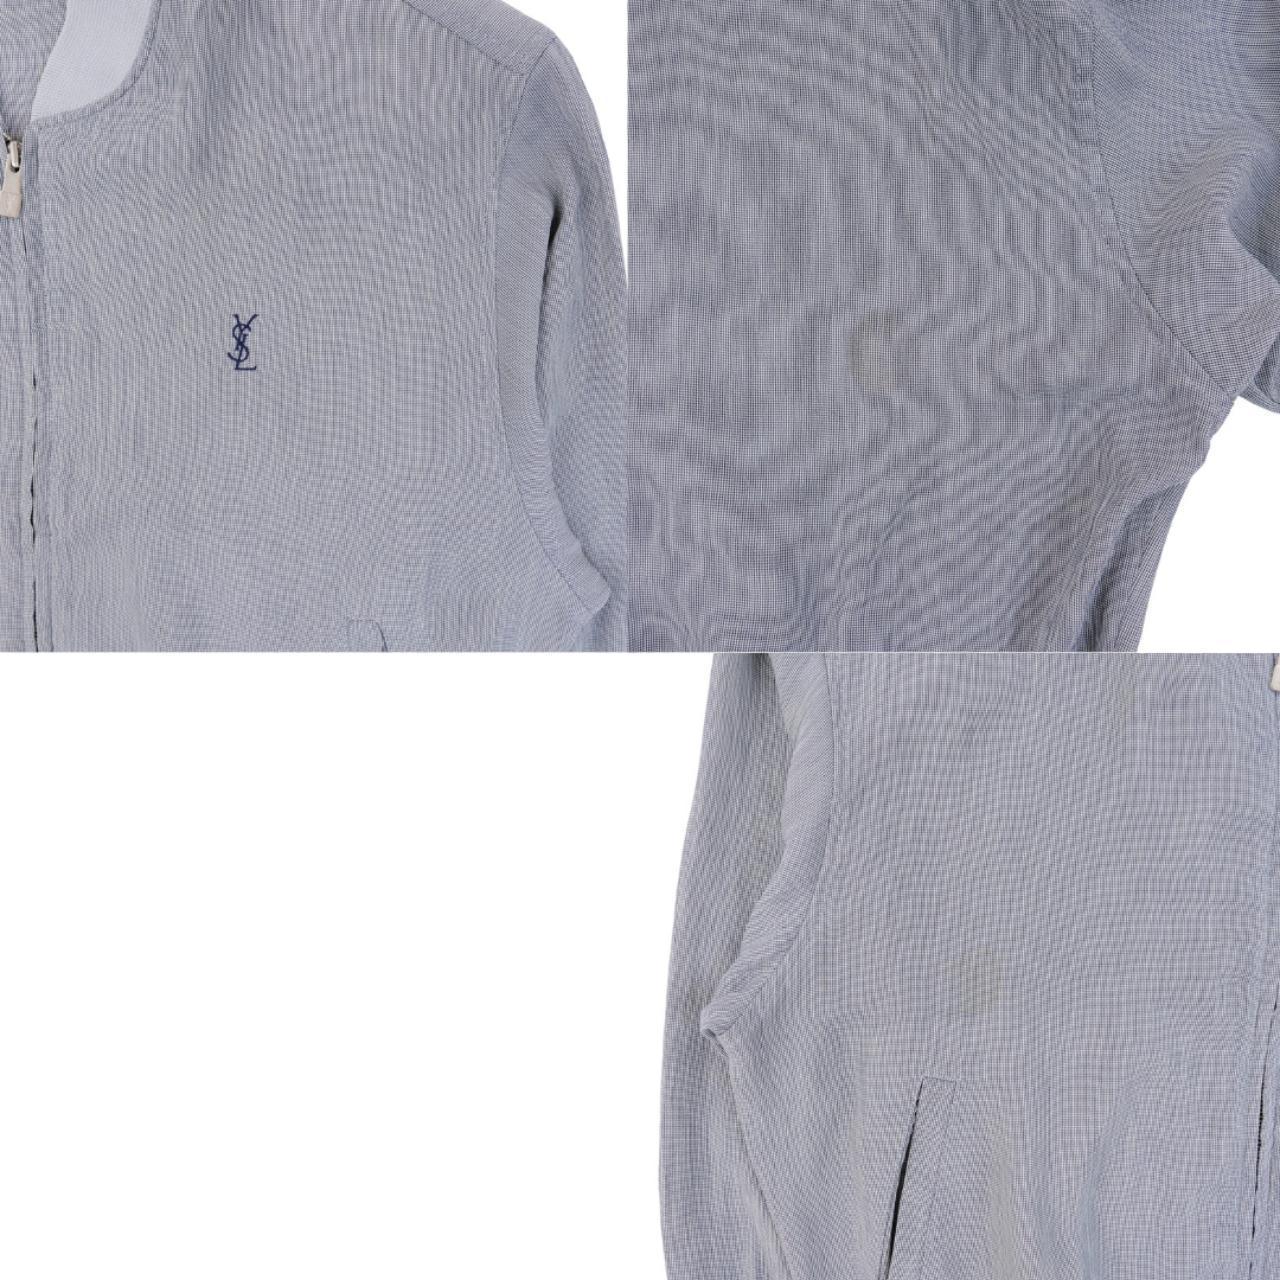 Vintage YSL Yves Saint Laurent Harrington Jacket L - Known Source